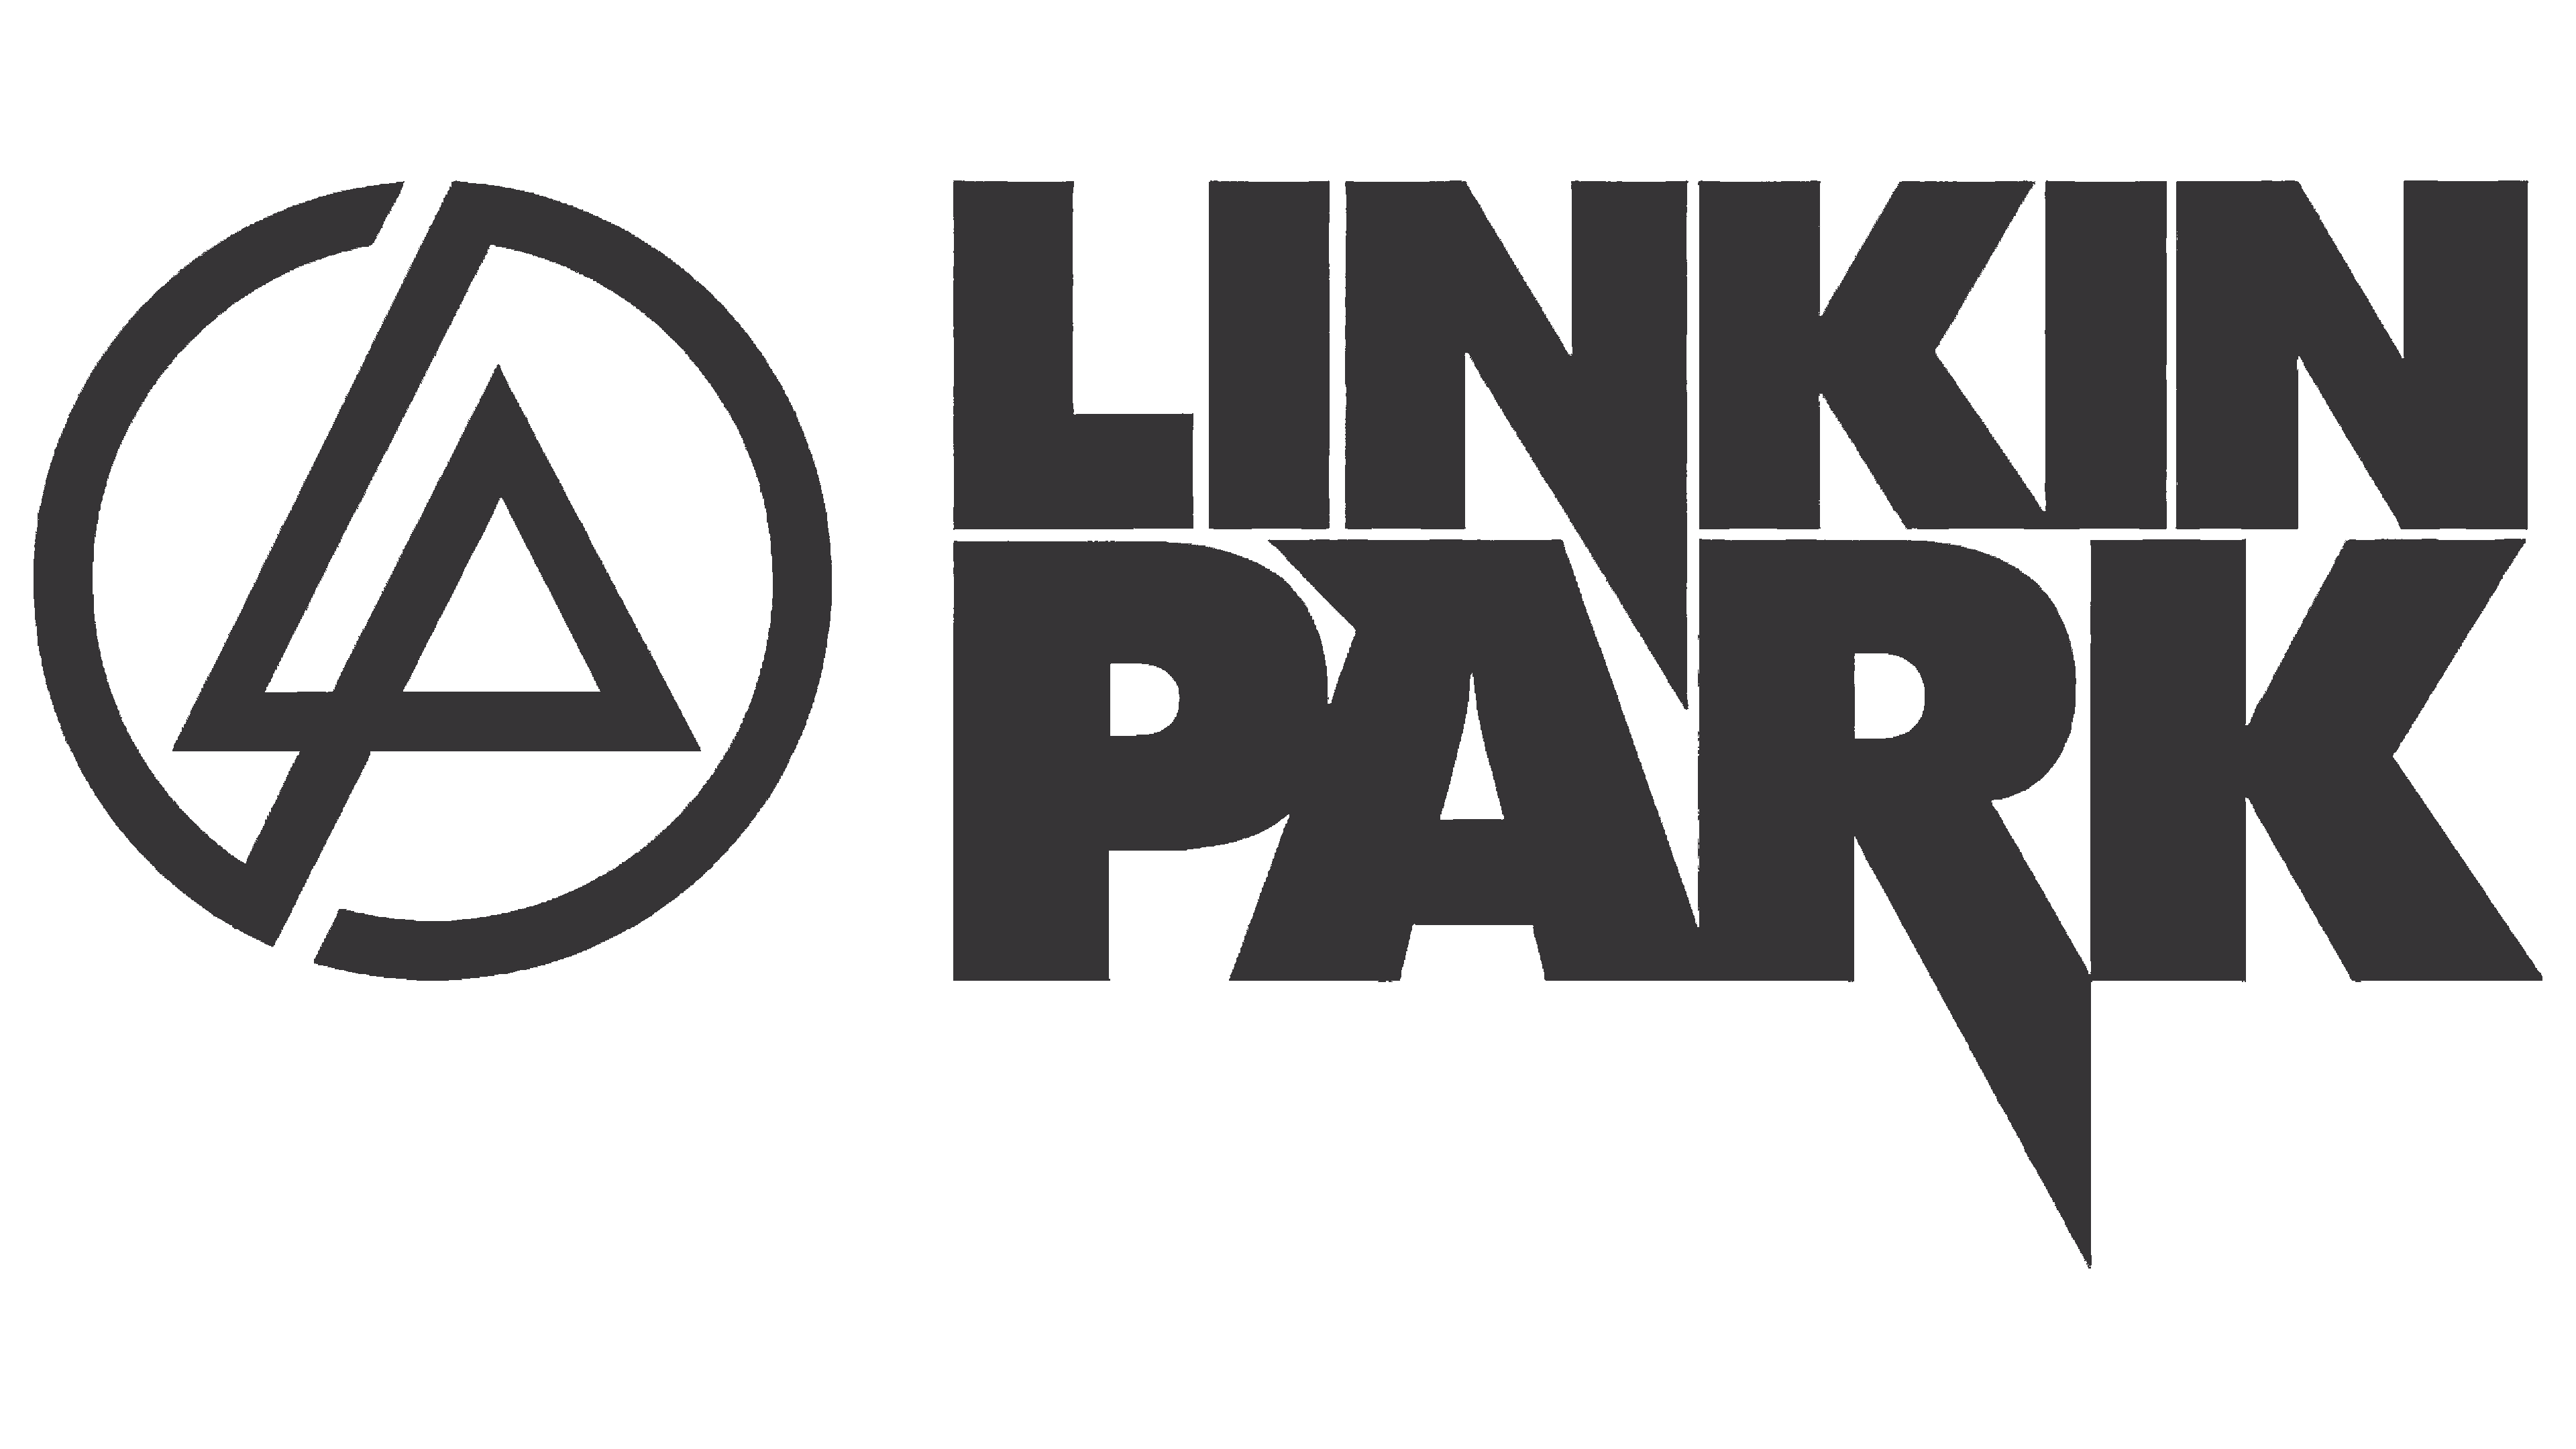 Linkin park valentine's. Linkin Park логотип группы. Линкин парк эмблема. Рок группа линкин парк. Линкин парк лого арт.